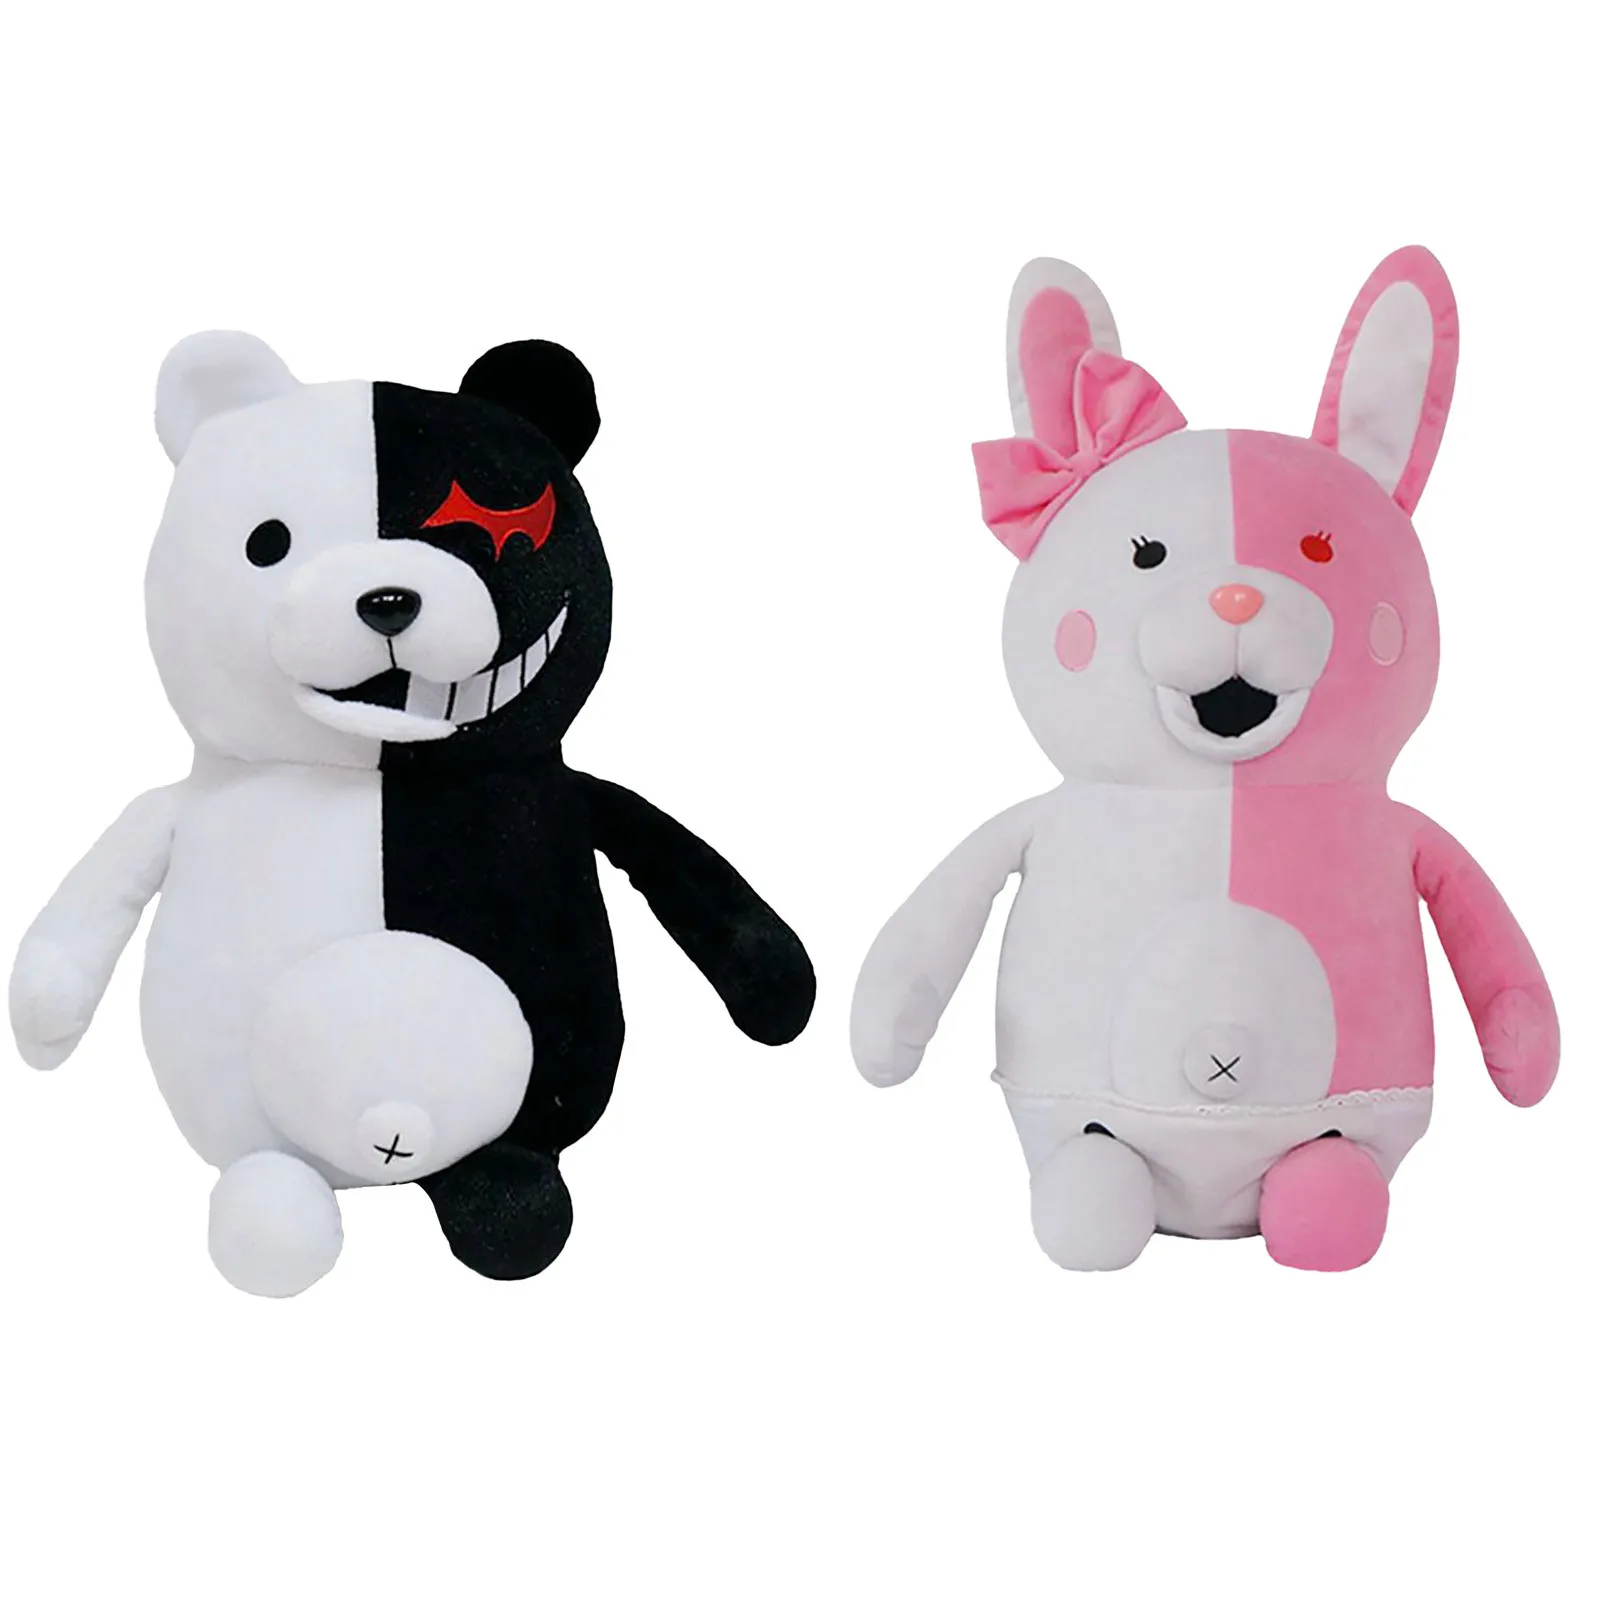 Soft Danganronpa Monokuma Black White Bear 25cm/9.8" Dangan Ronpa Plush Toy Doll